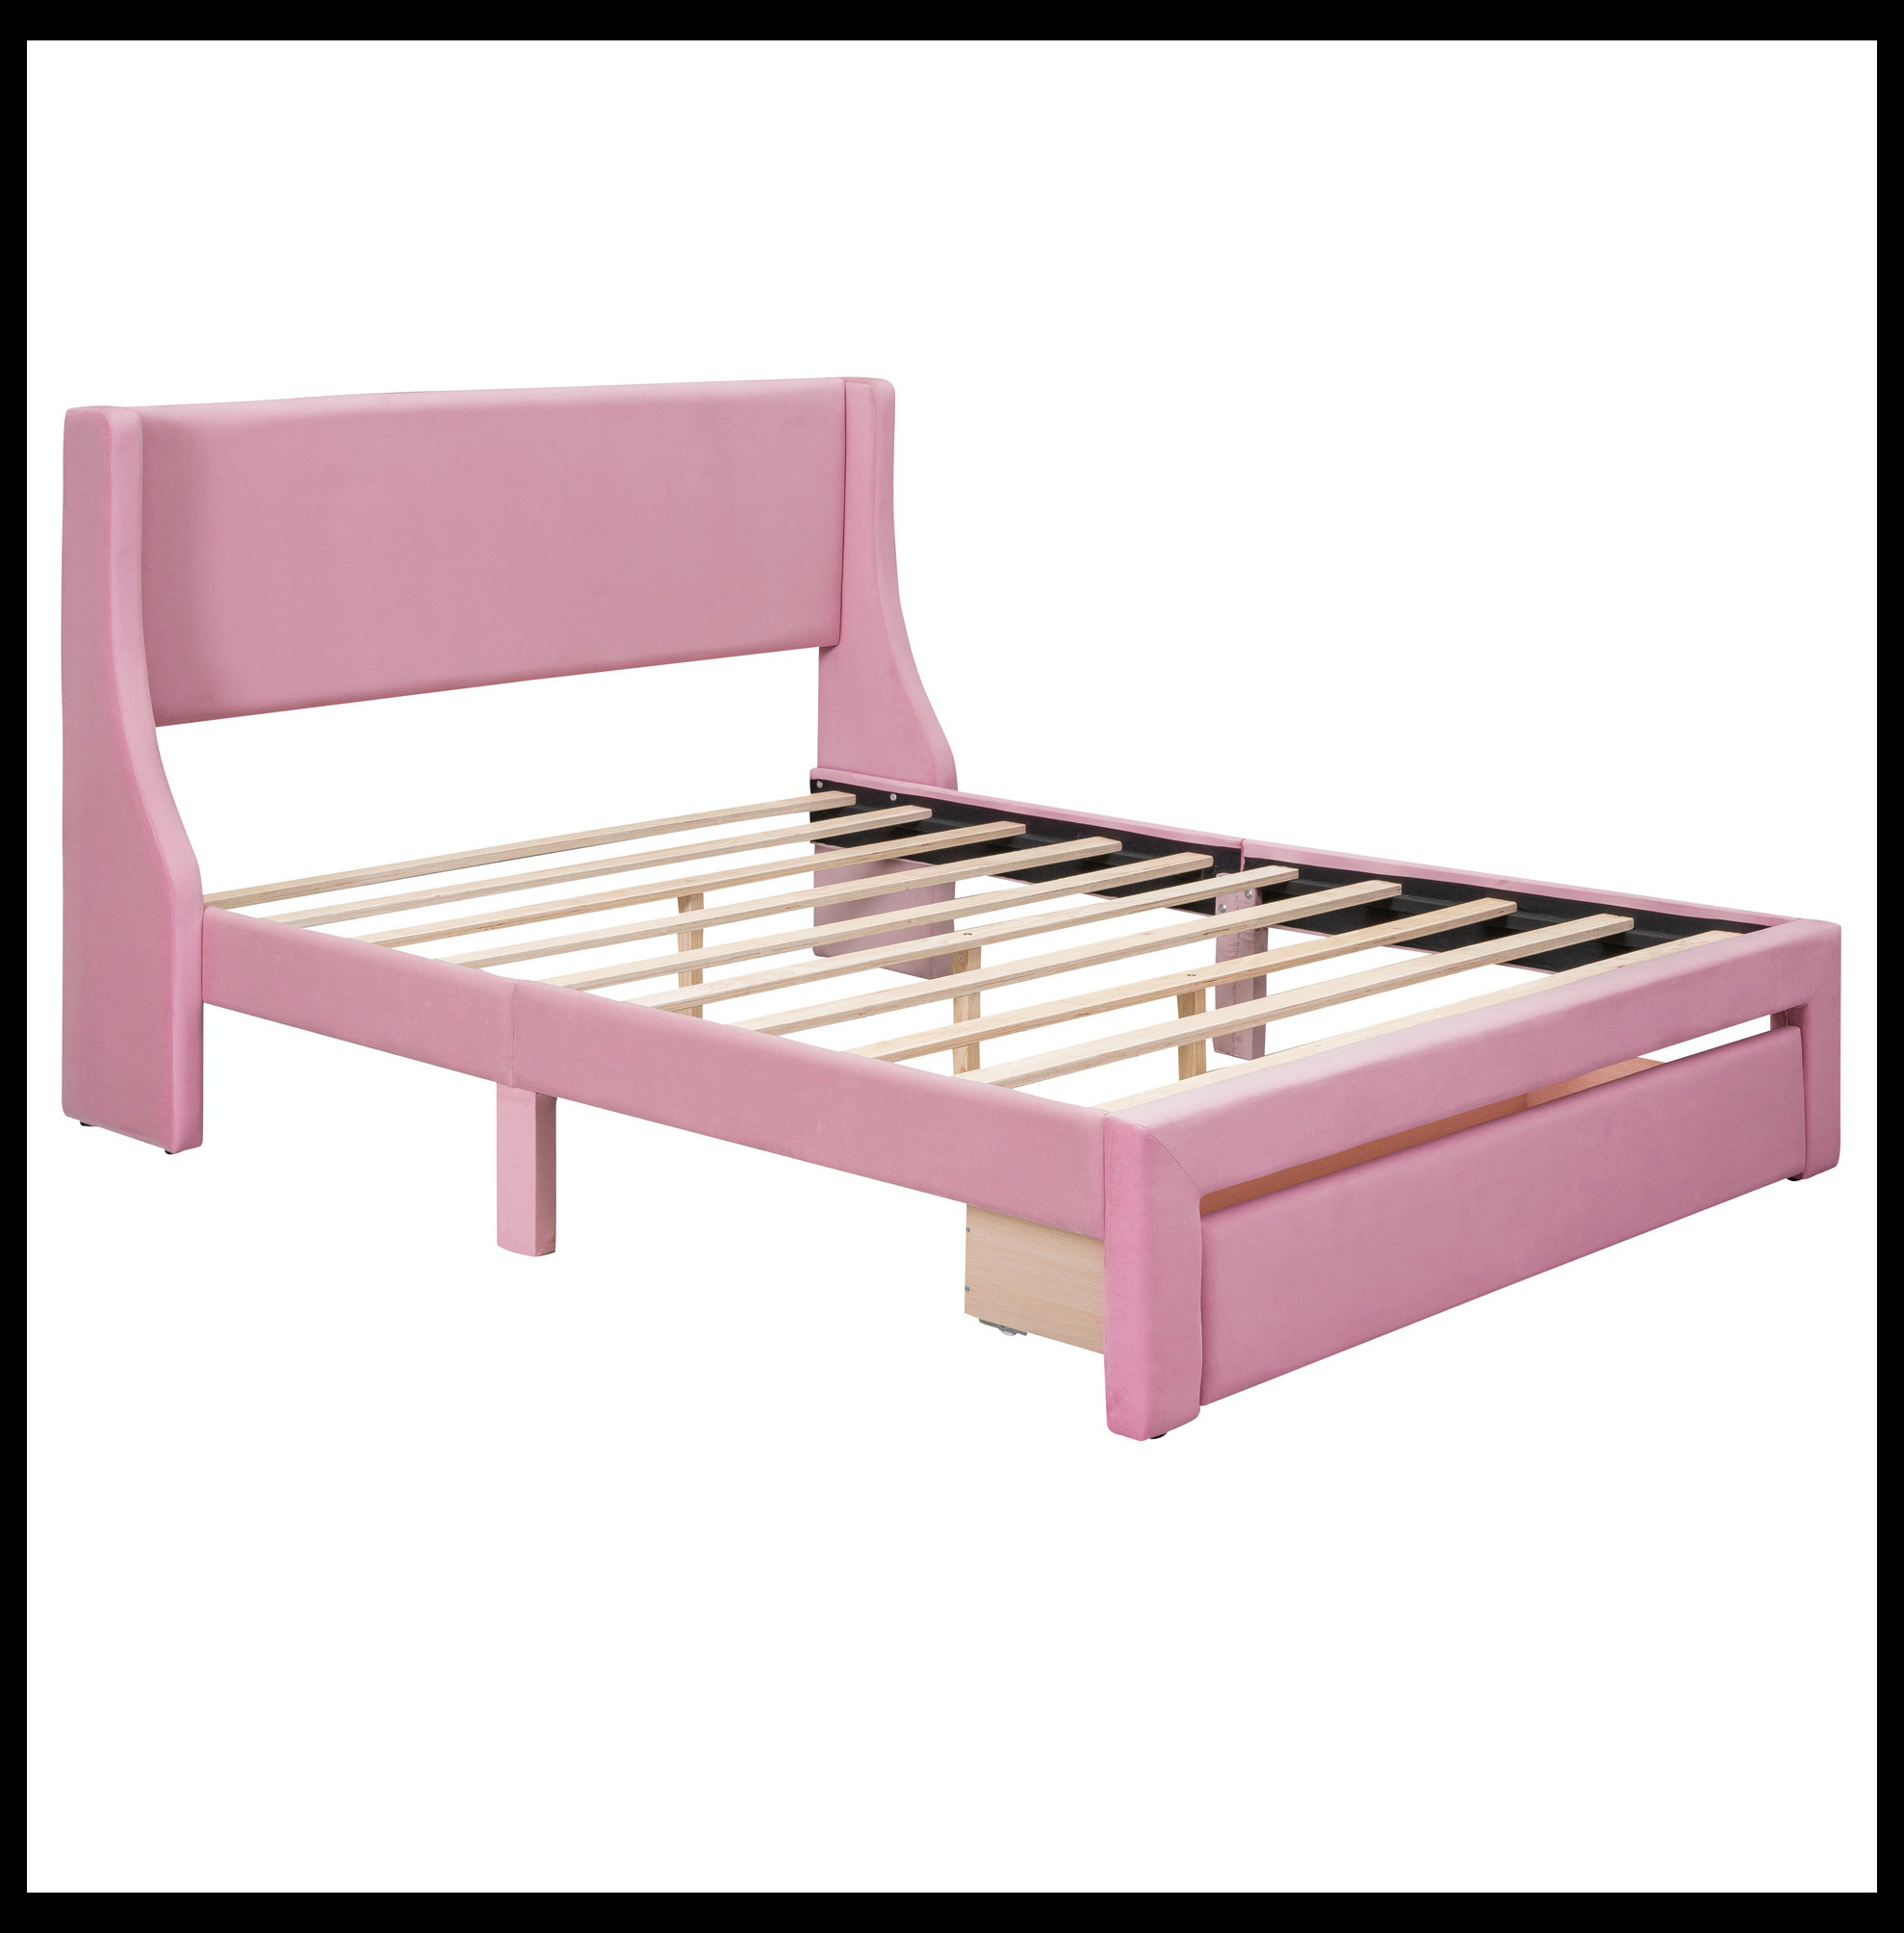 Mercer41 Warishah Upholstered Platform Storage Bed | Wayfair